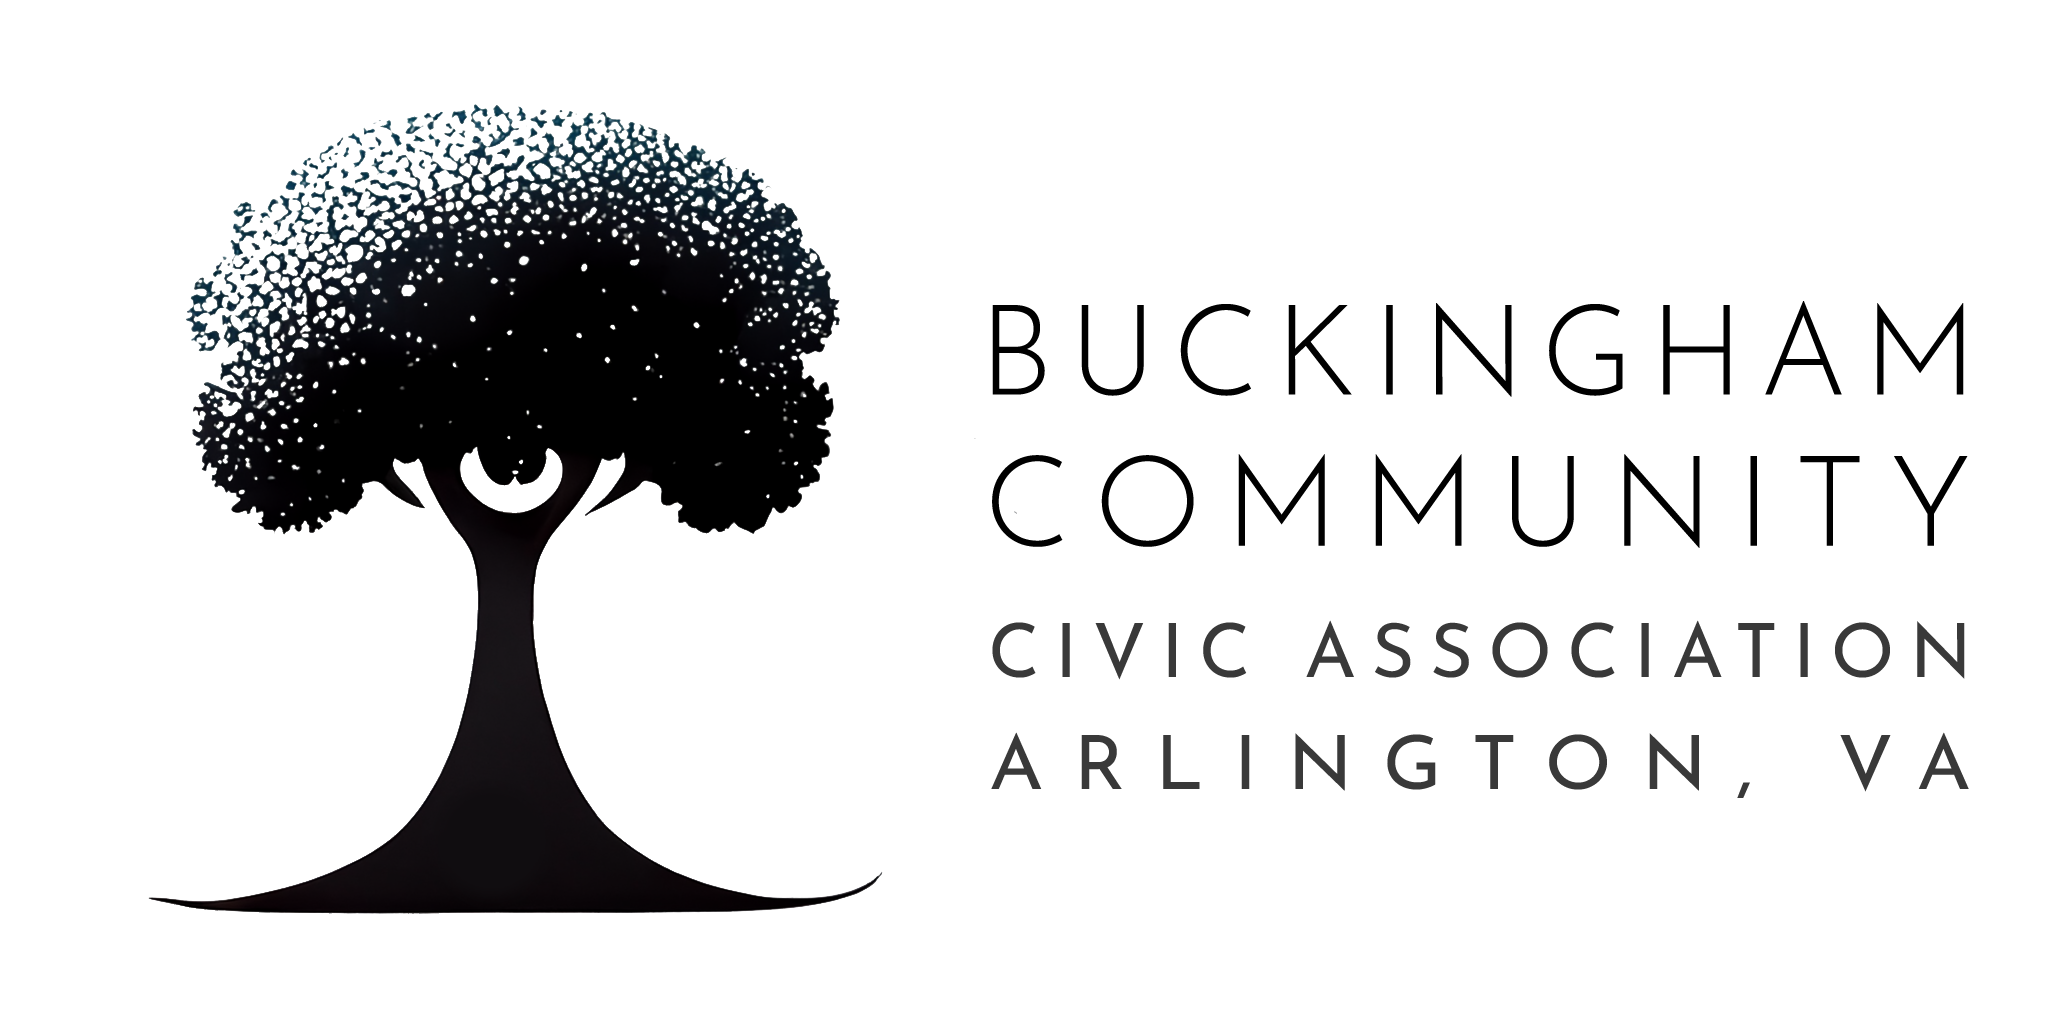 Buckingham Community Civic Association